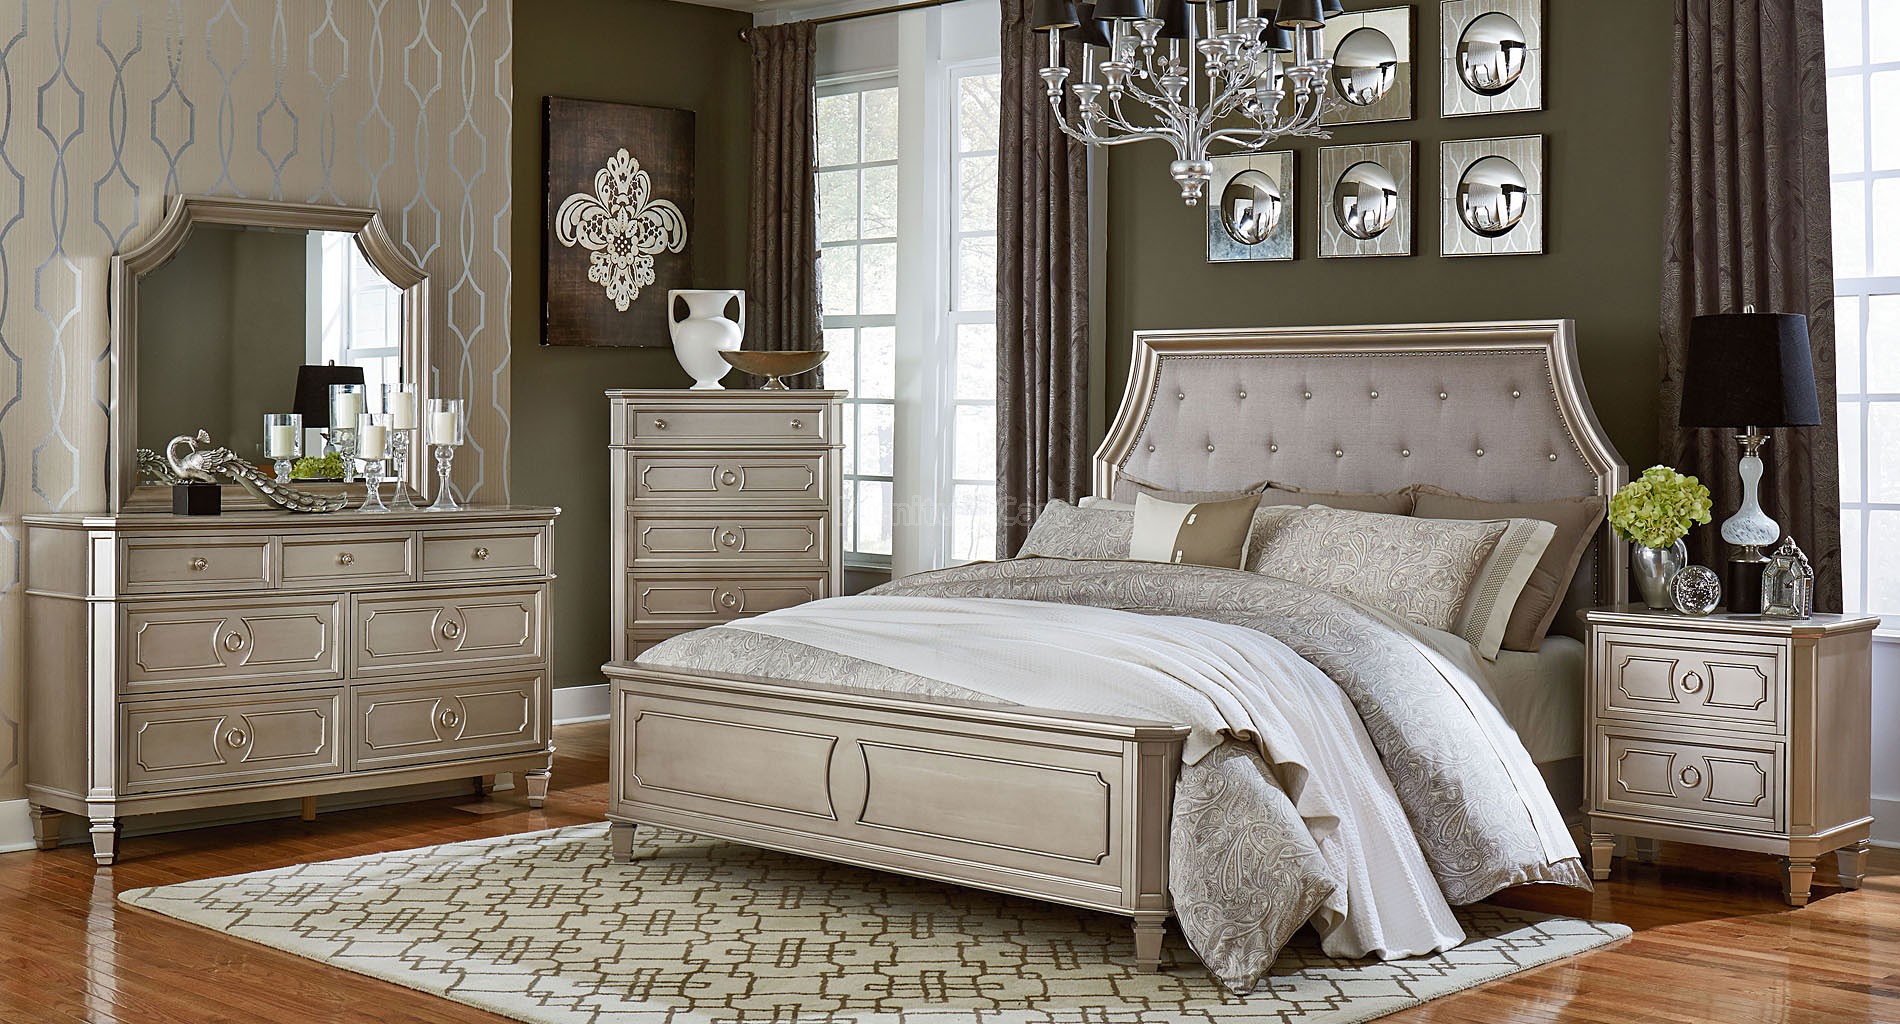 repaint bedroom furniture silver